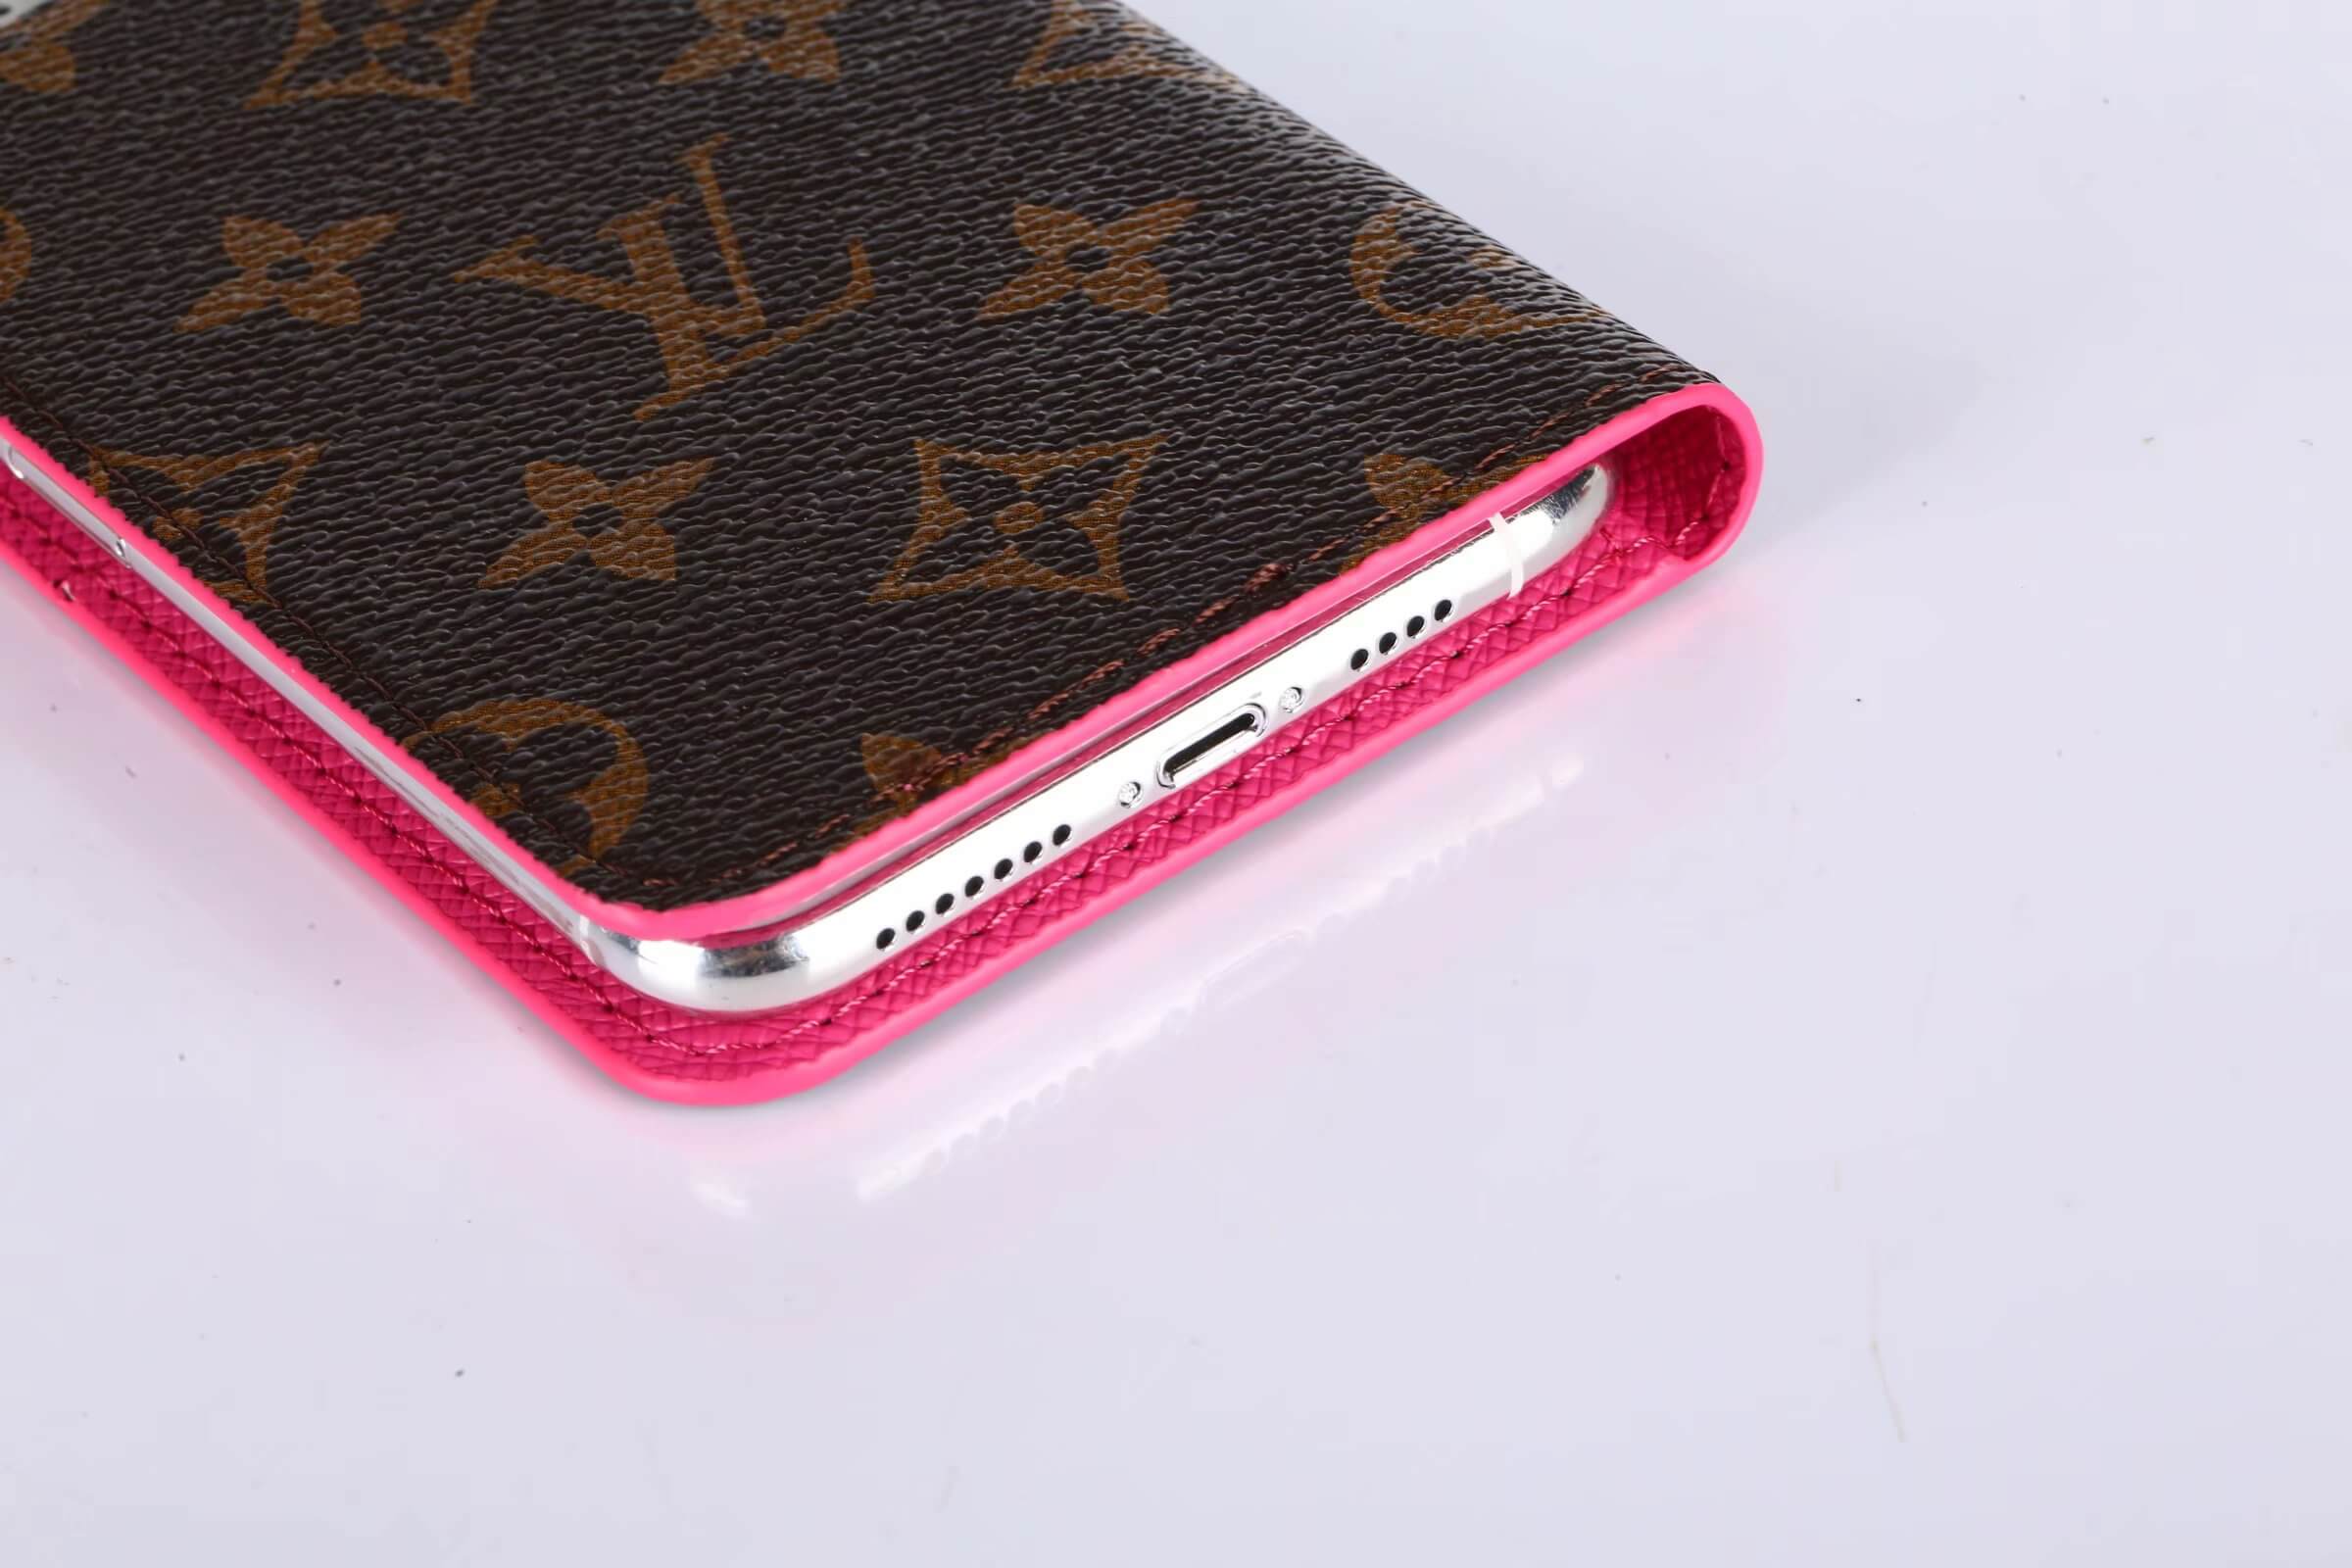 Classic Louis Vuitton iPhone 14 Plus Case